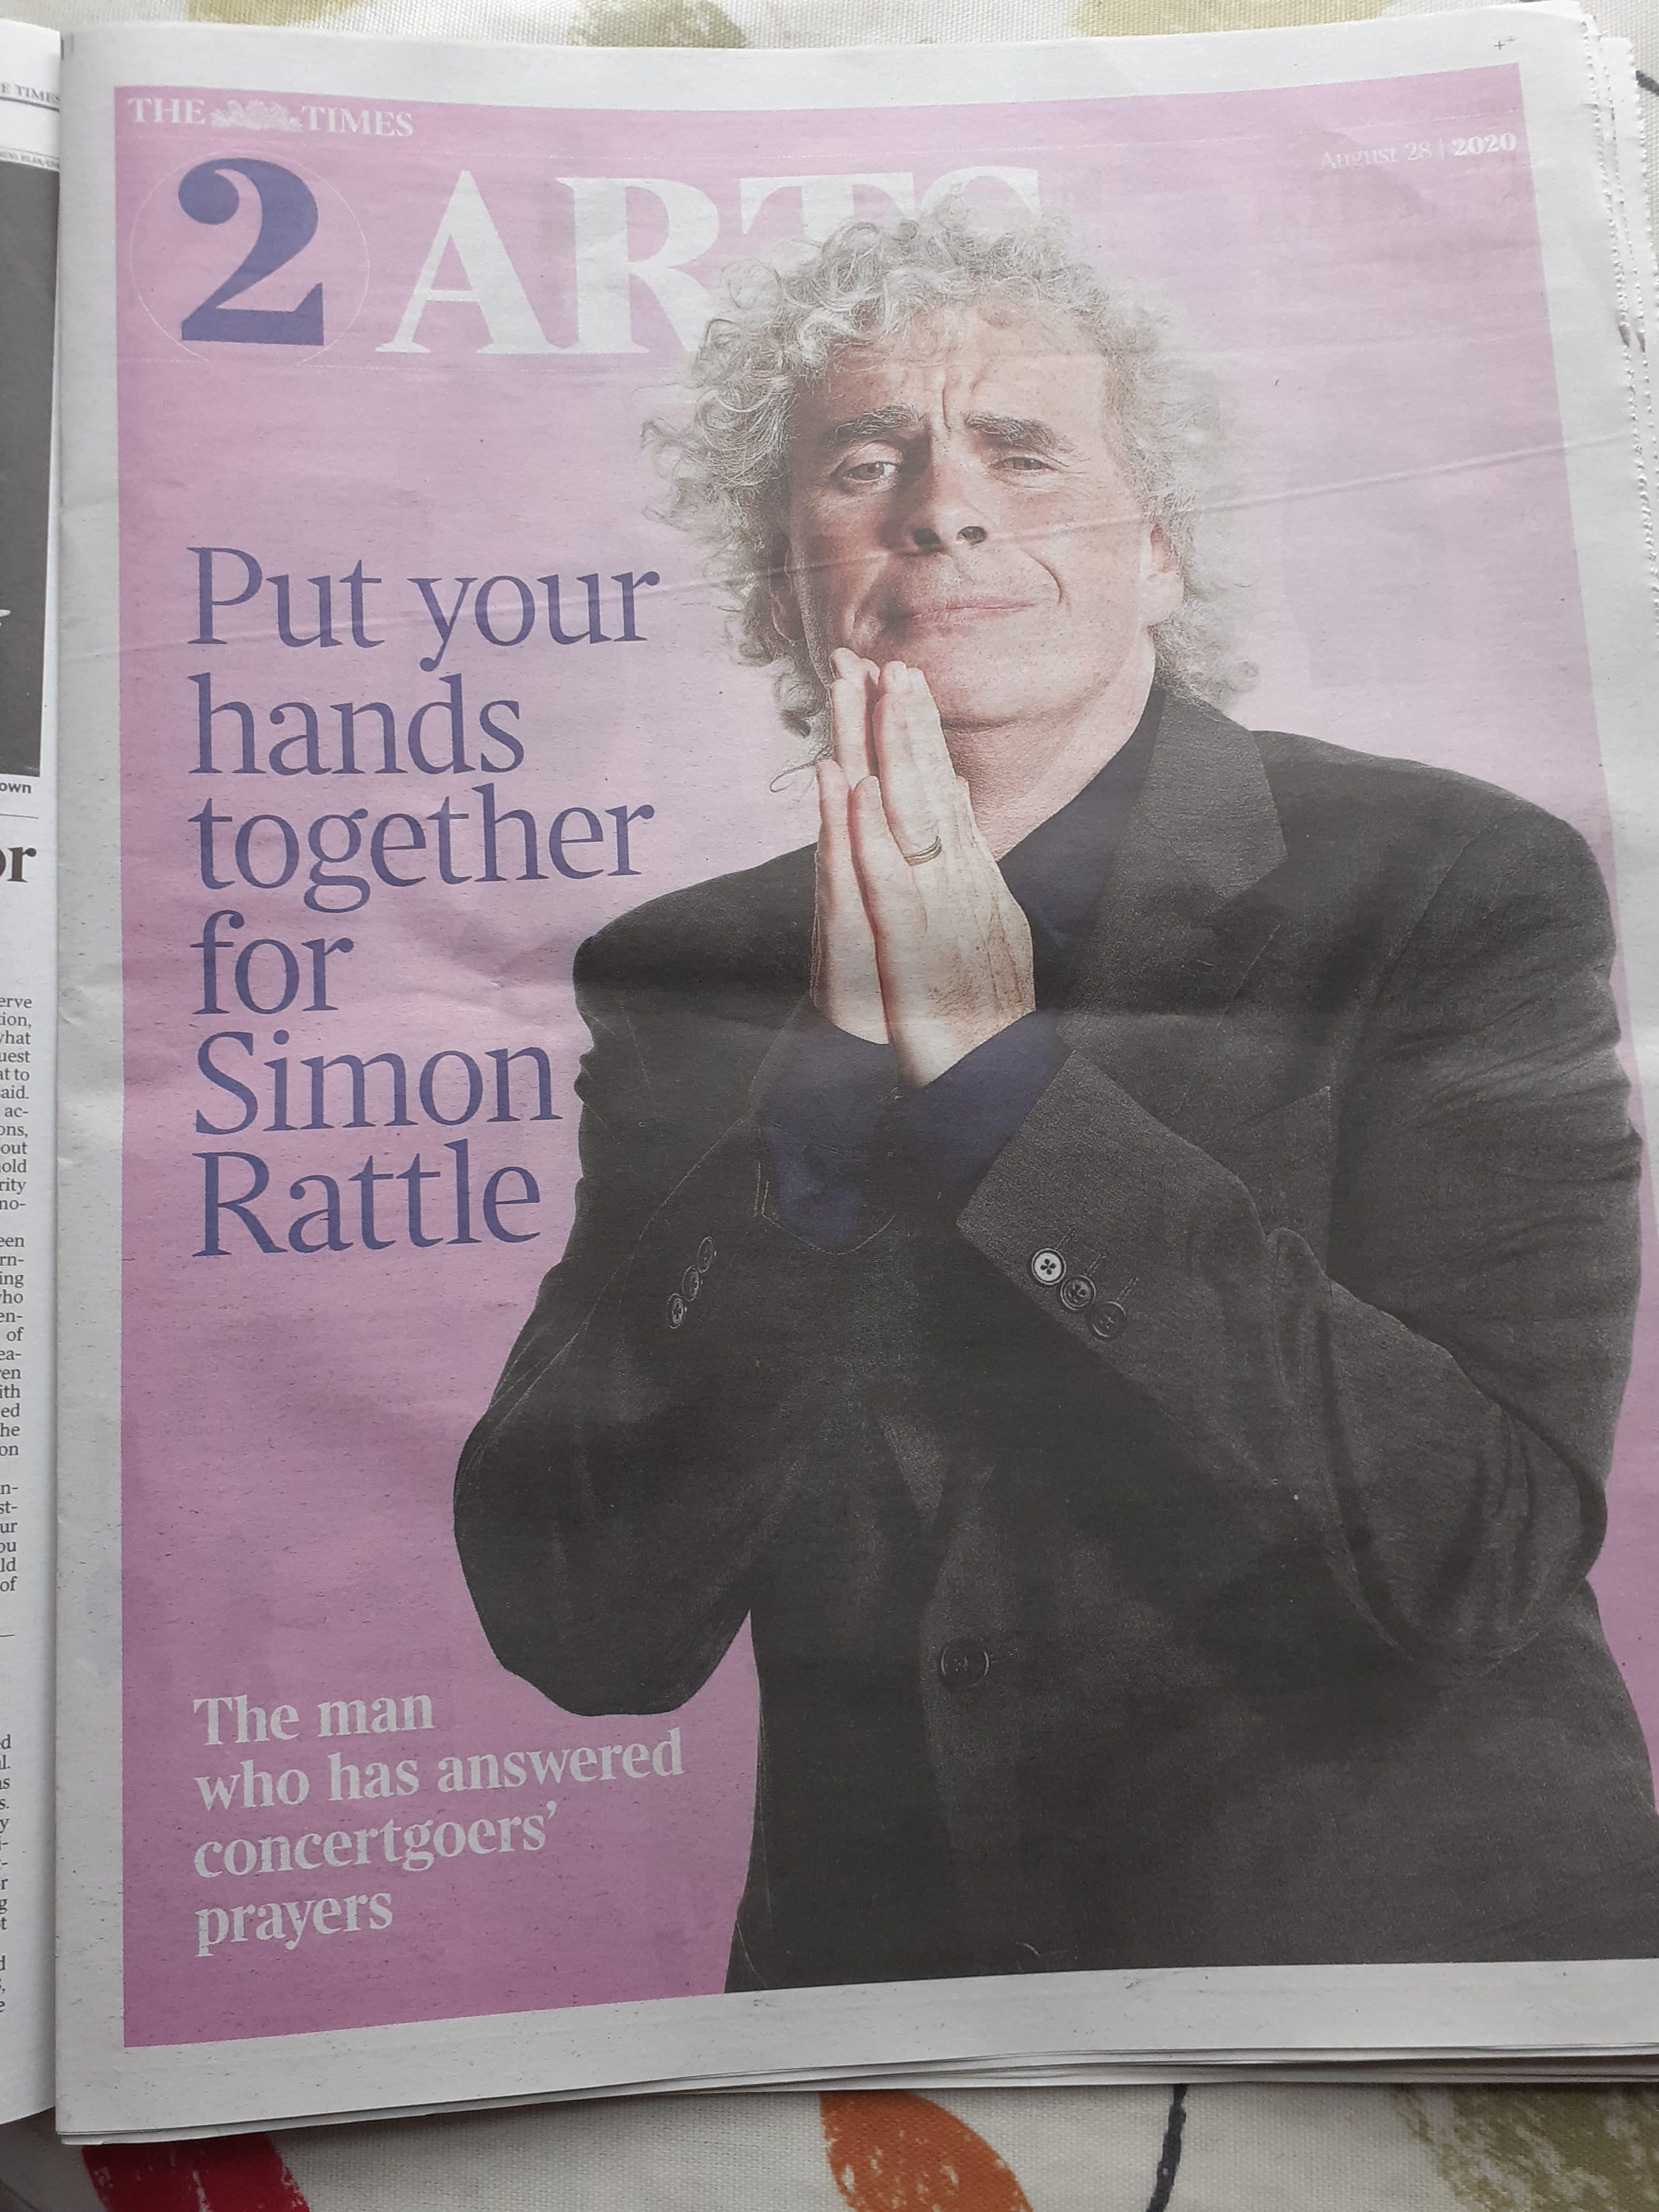 Let us pray for Simon Rattle